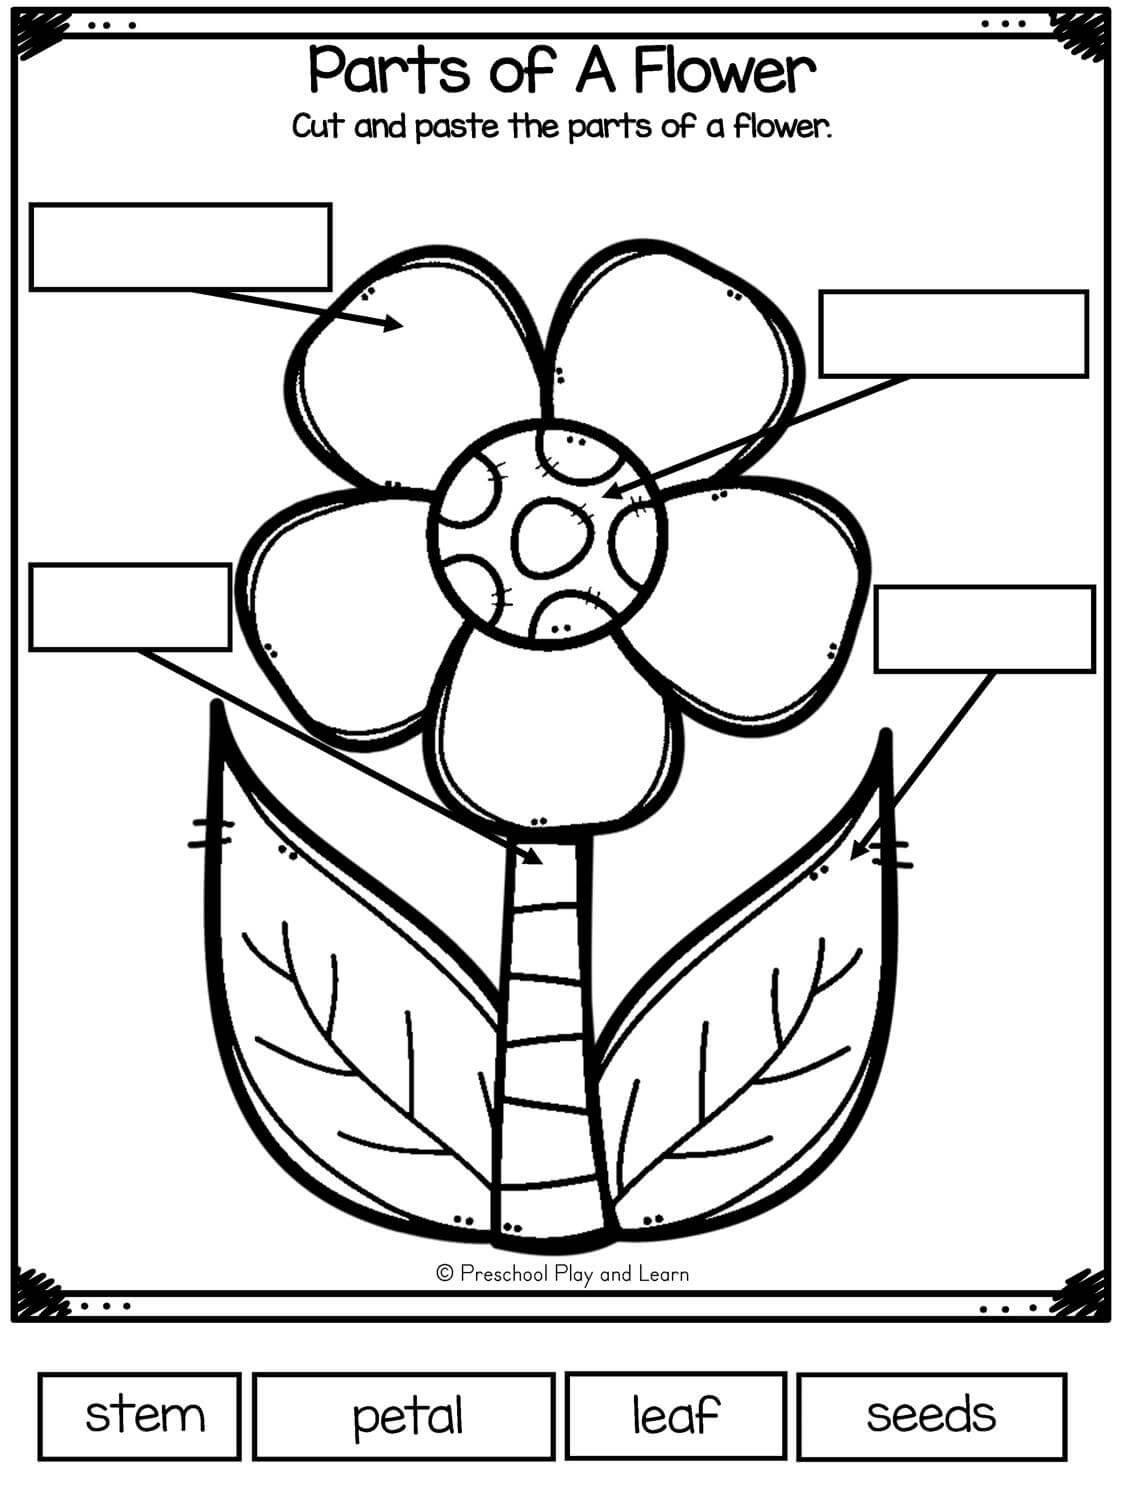 parts-of-a-flower-worksheet